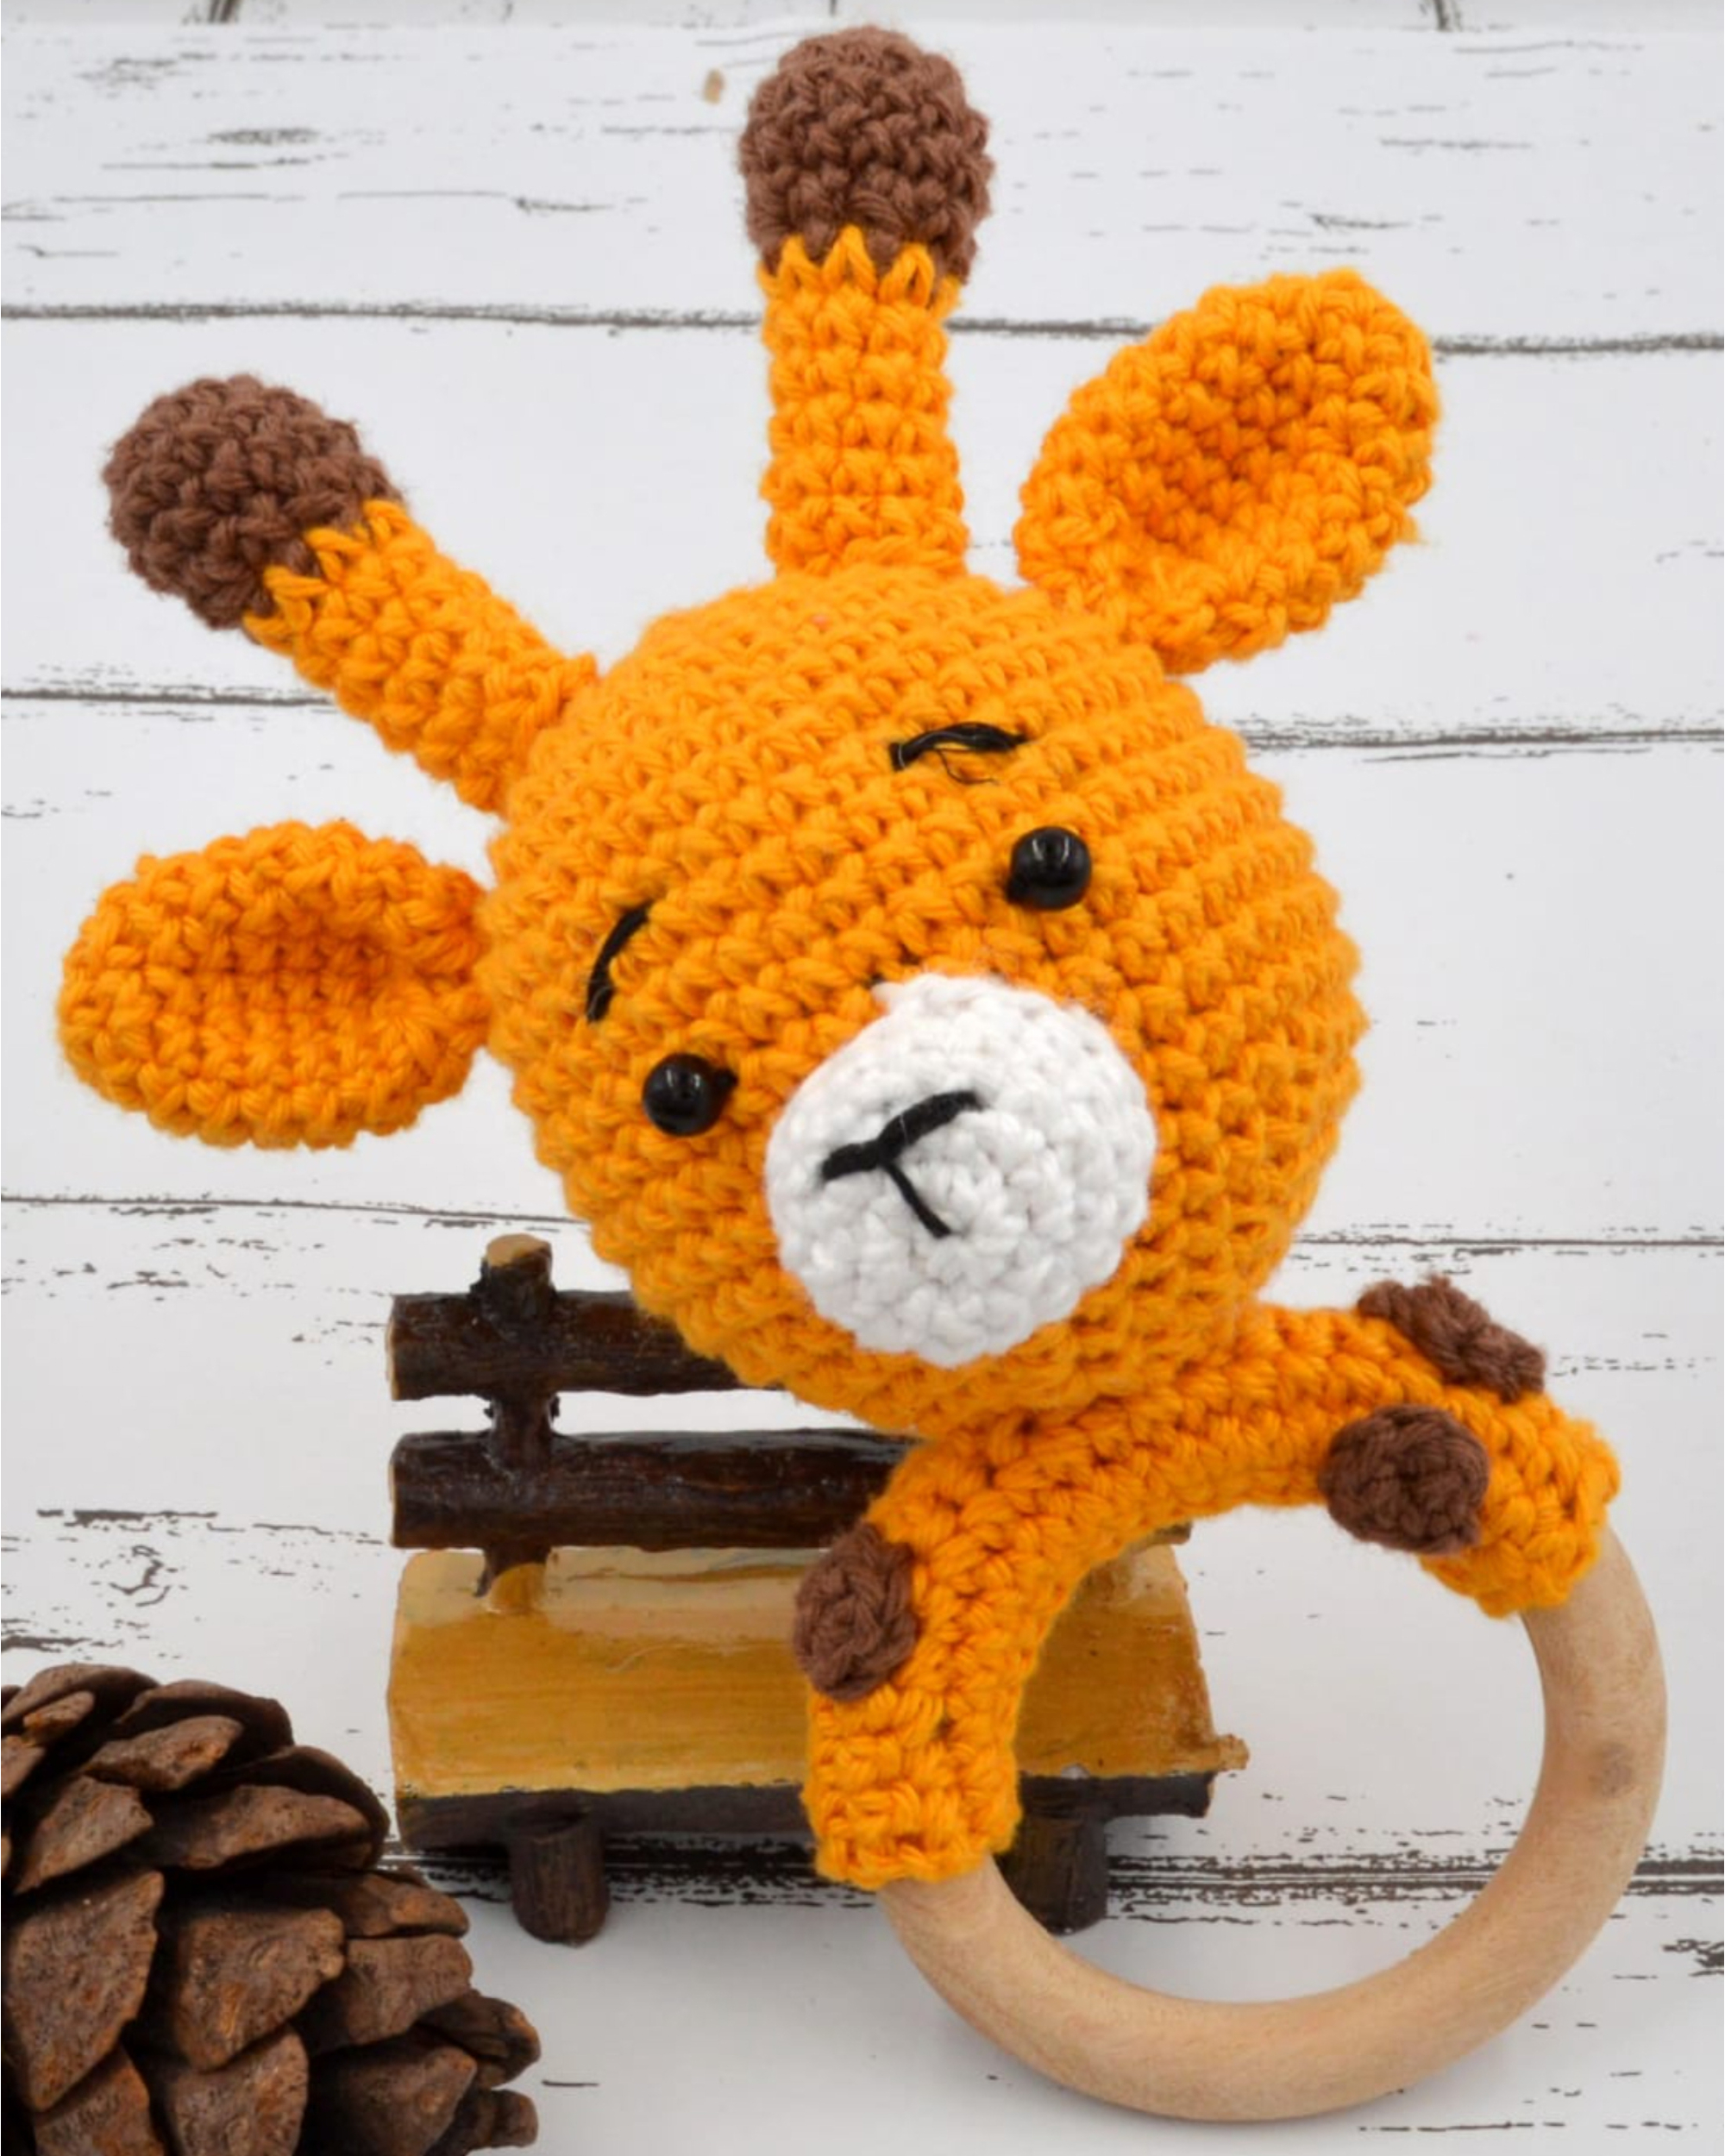 Hand crocheted baby sound rattle - giraffe